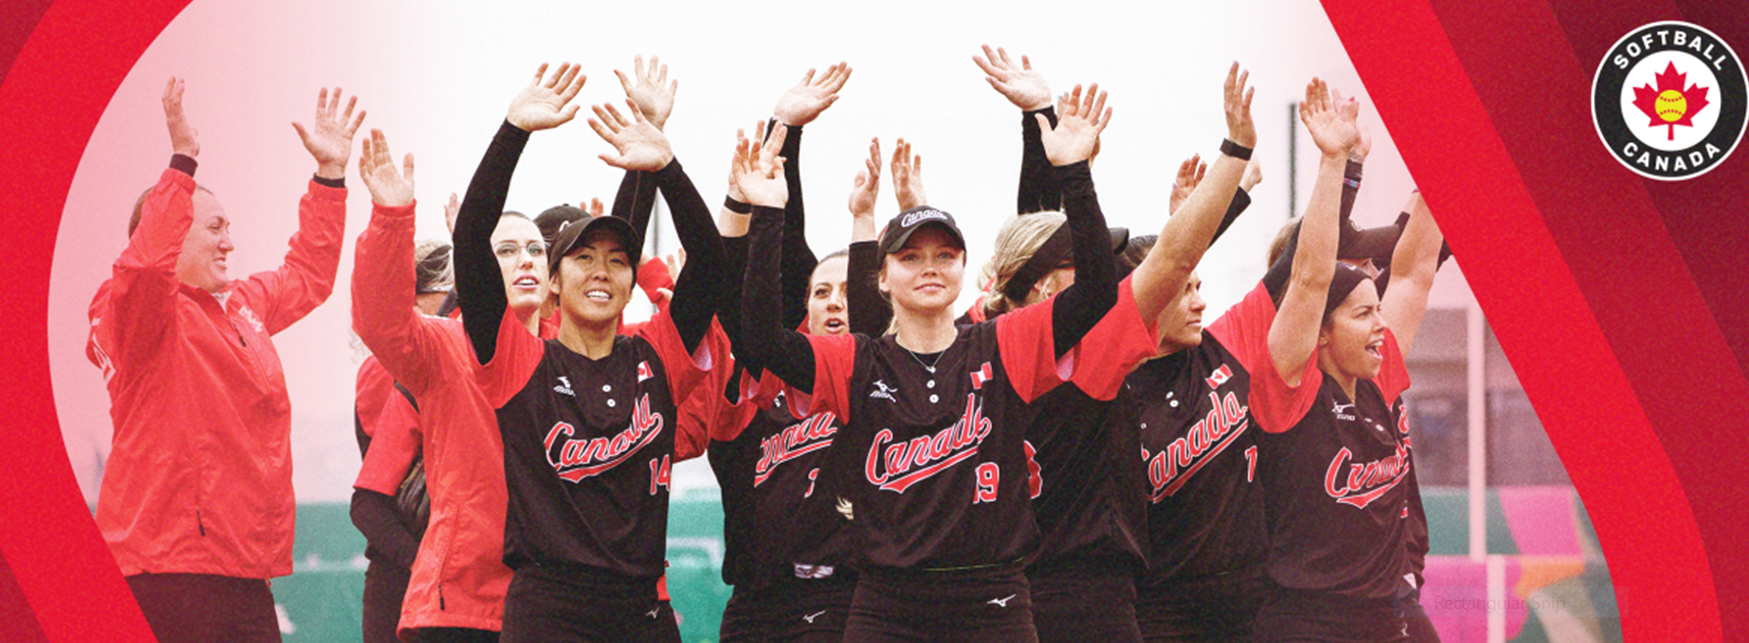 Softball Canada names women’s team for Tokyo 2020